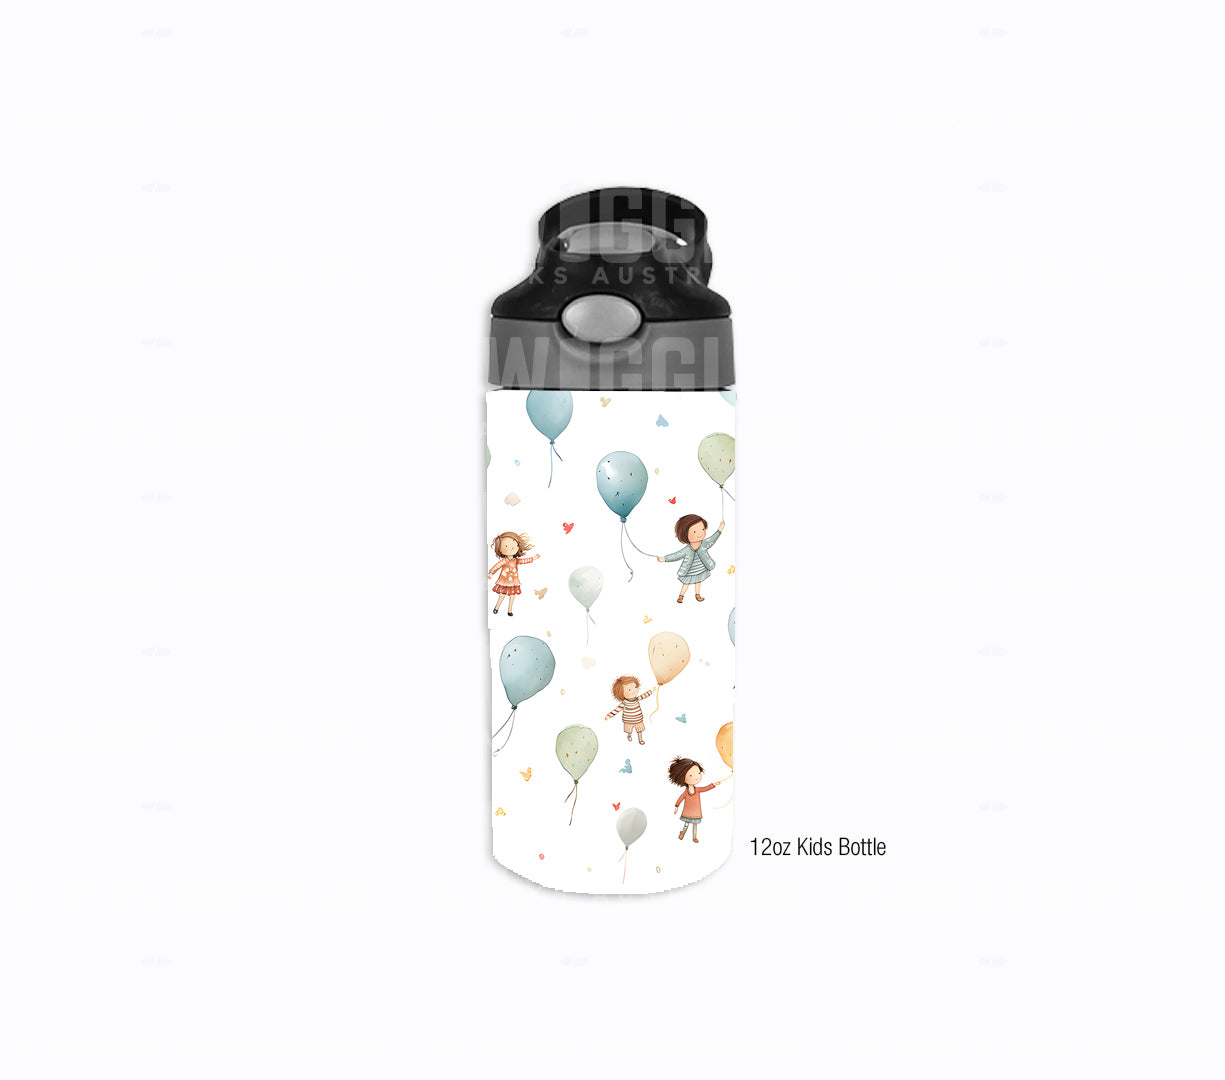 Balloons Watercolour Kids #104 - Digital Download - Assorted Bottle Sizes